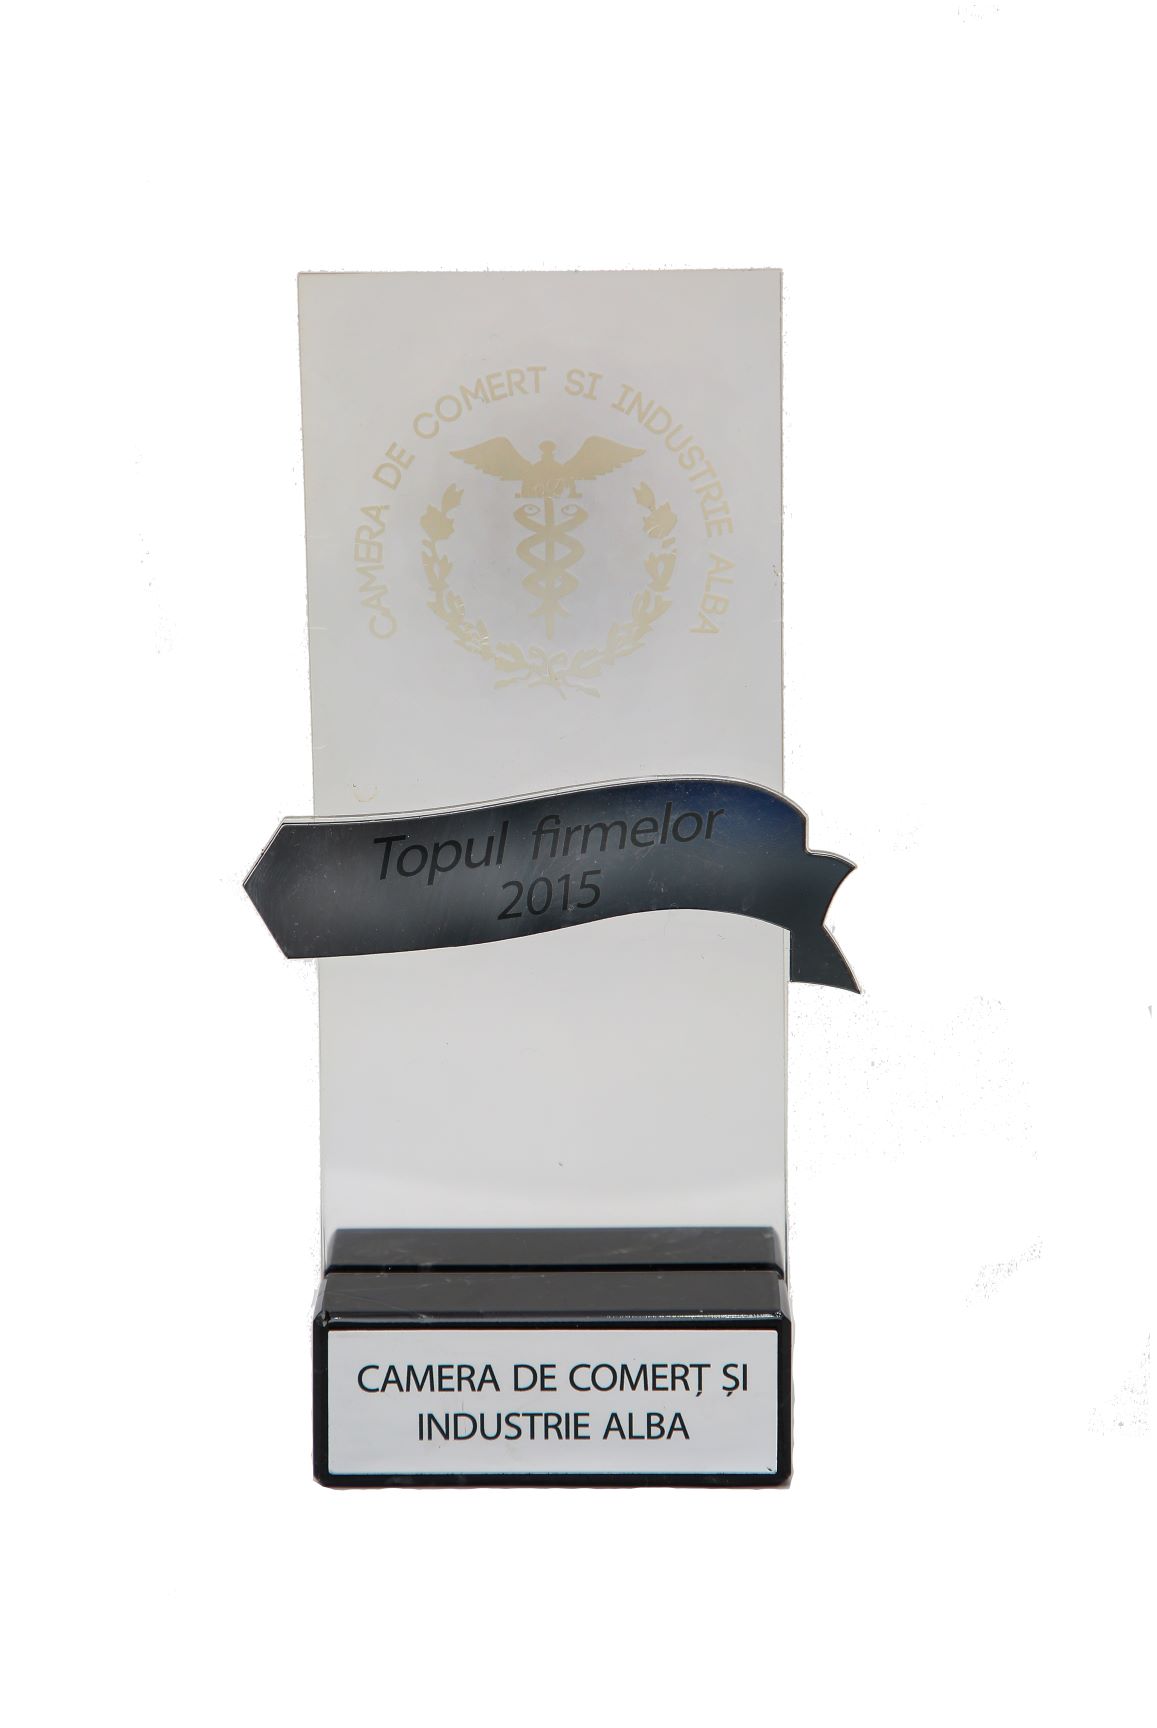 TOPUL FIRMELOR CAMERA DE COMERT ALBA